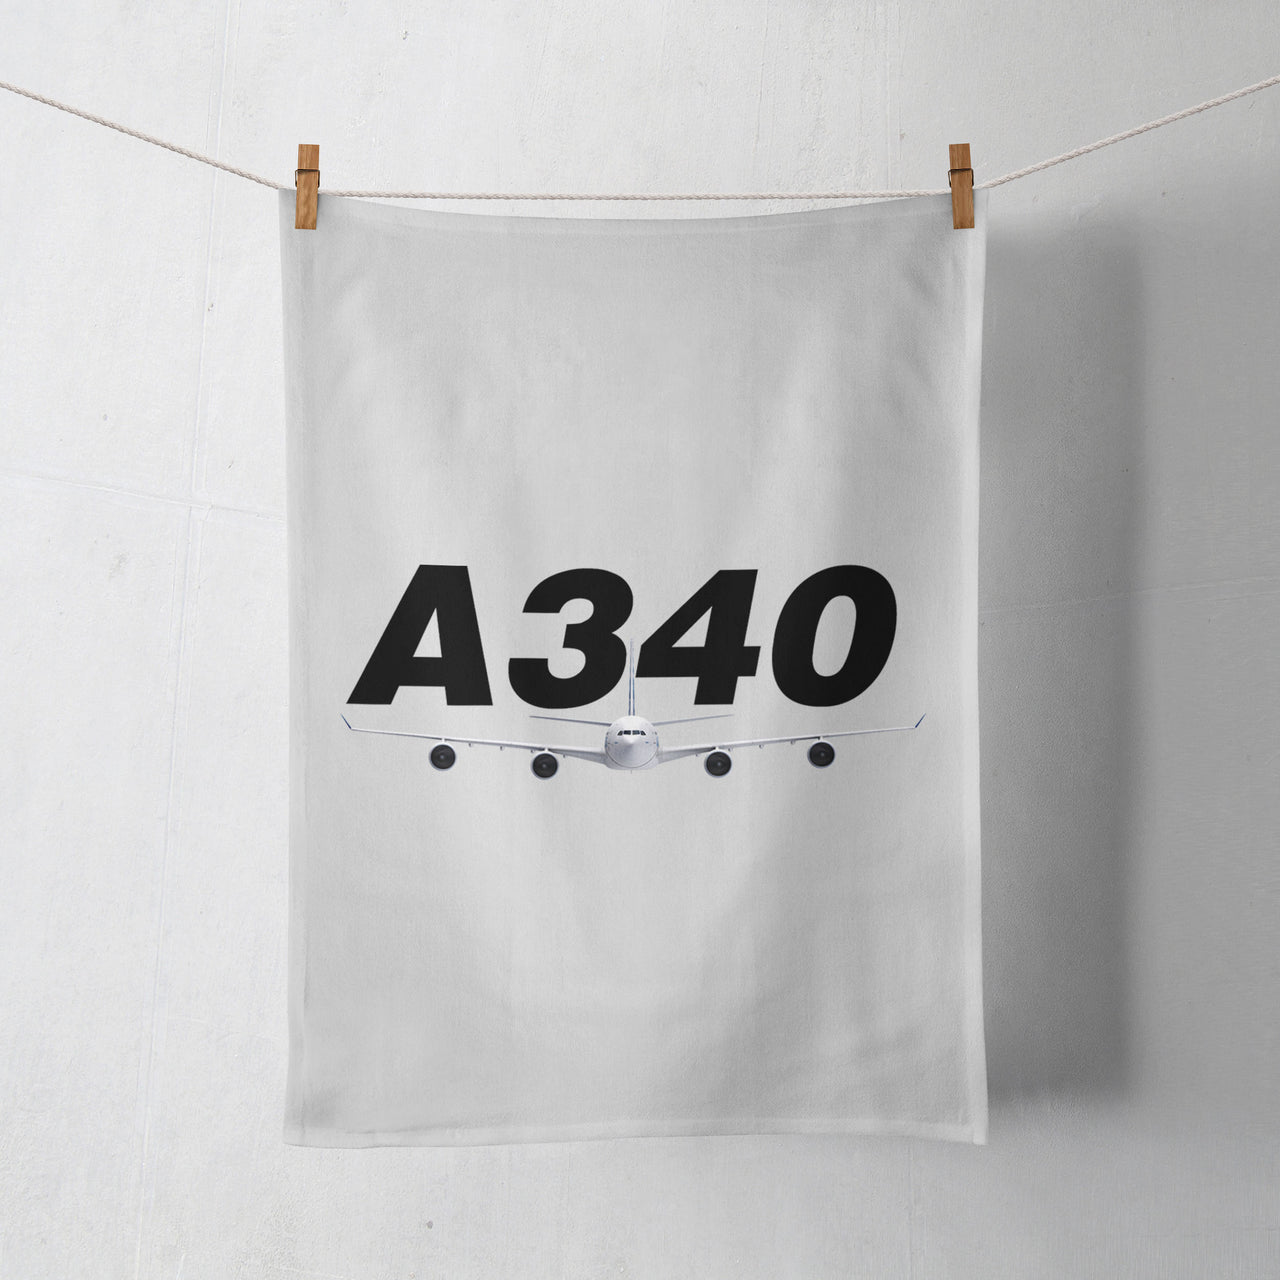 Super Airbus A340 Designed Towels